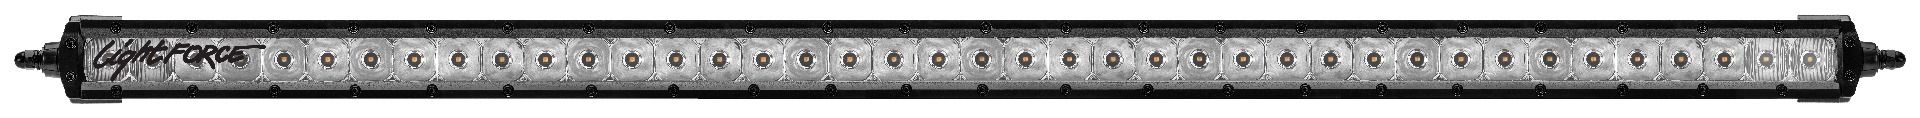 LIGHTFORCE - 40" SINGLE ROW LED BAR - COMBO DUAL WATTAGE (NEW) - REEL 'N' DEAL TACKLE